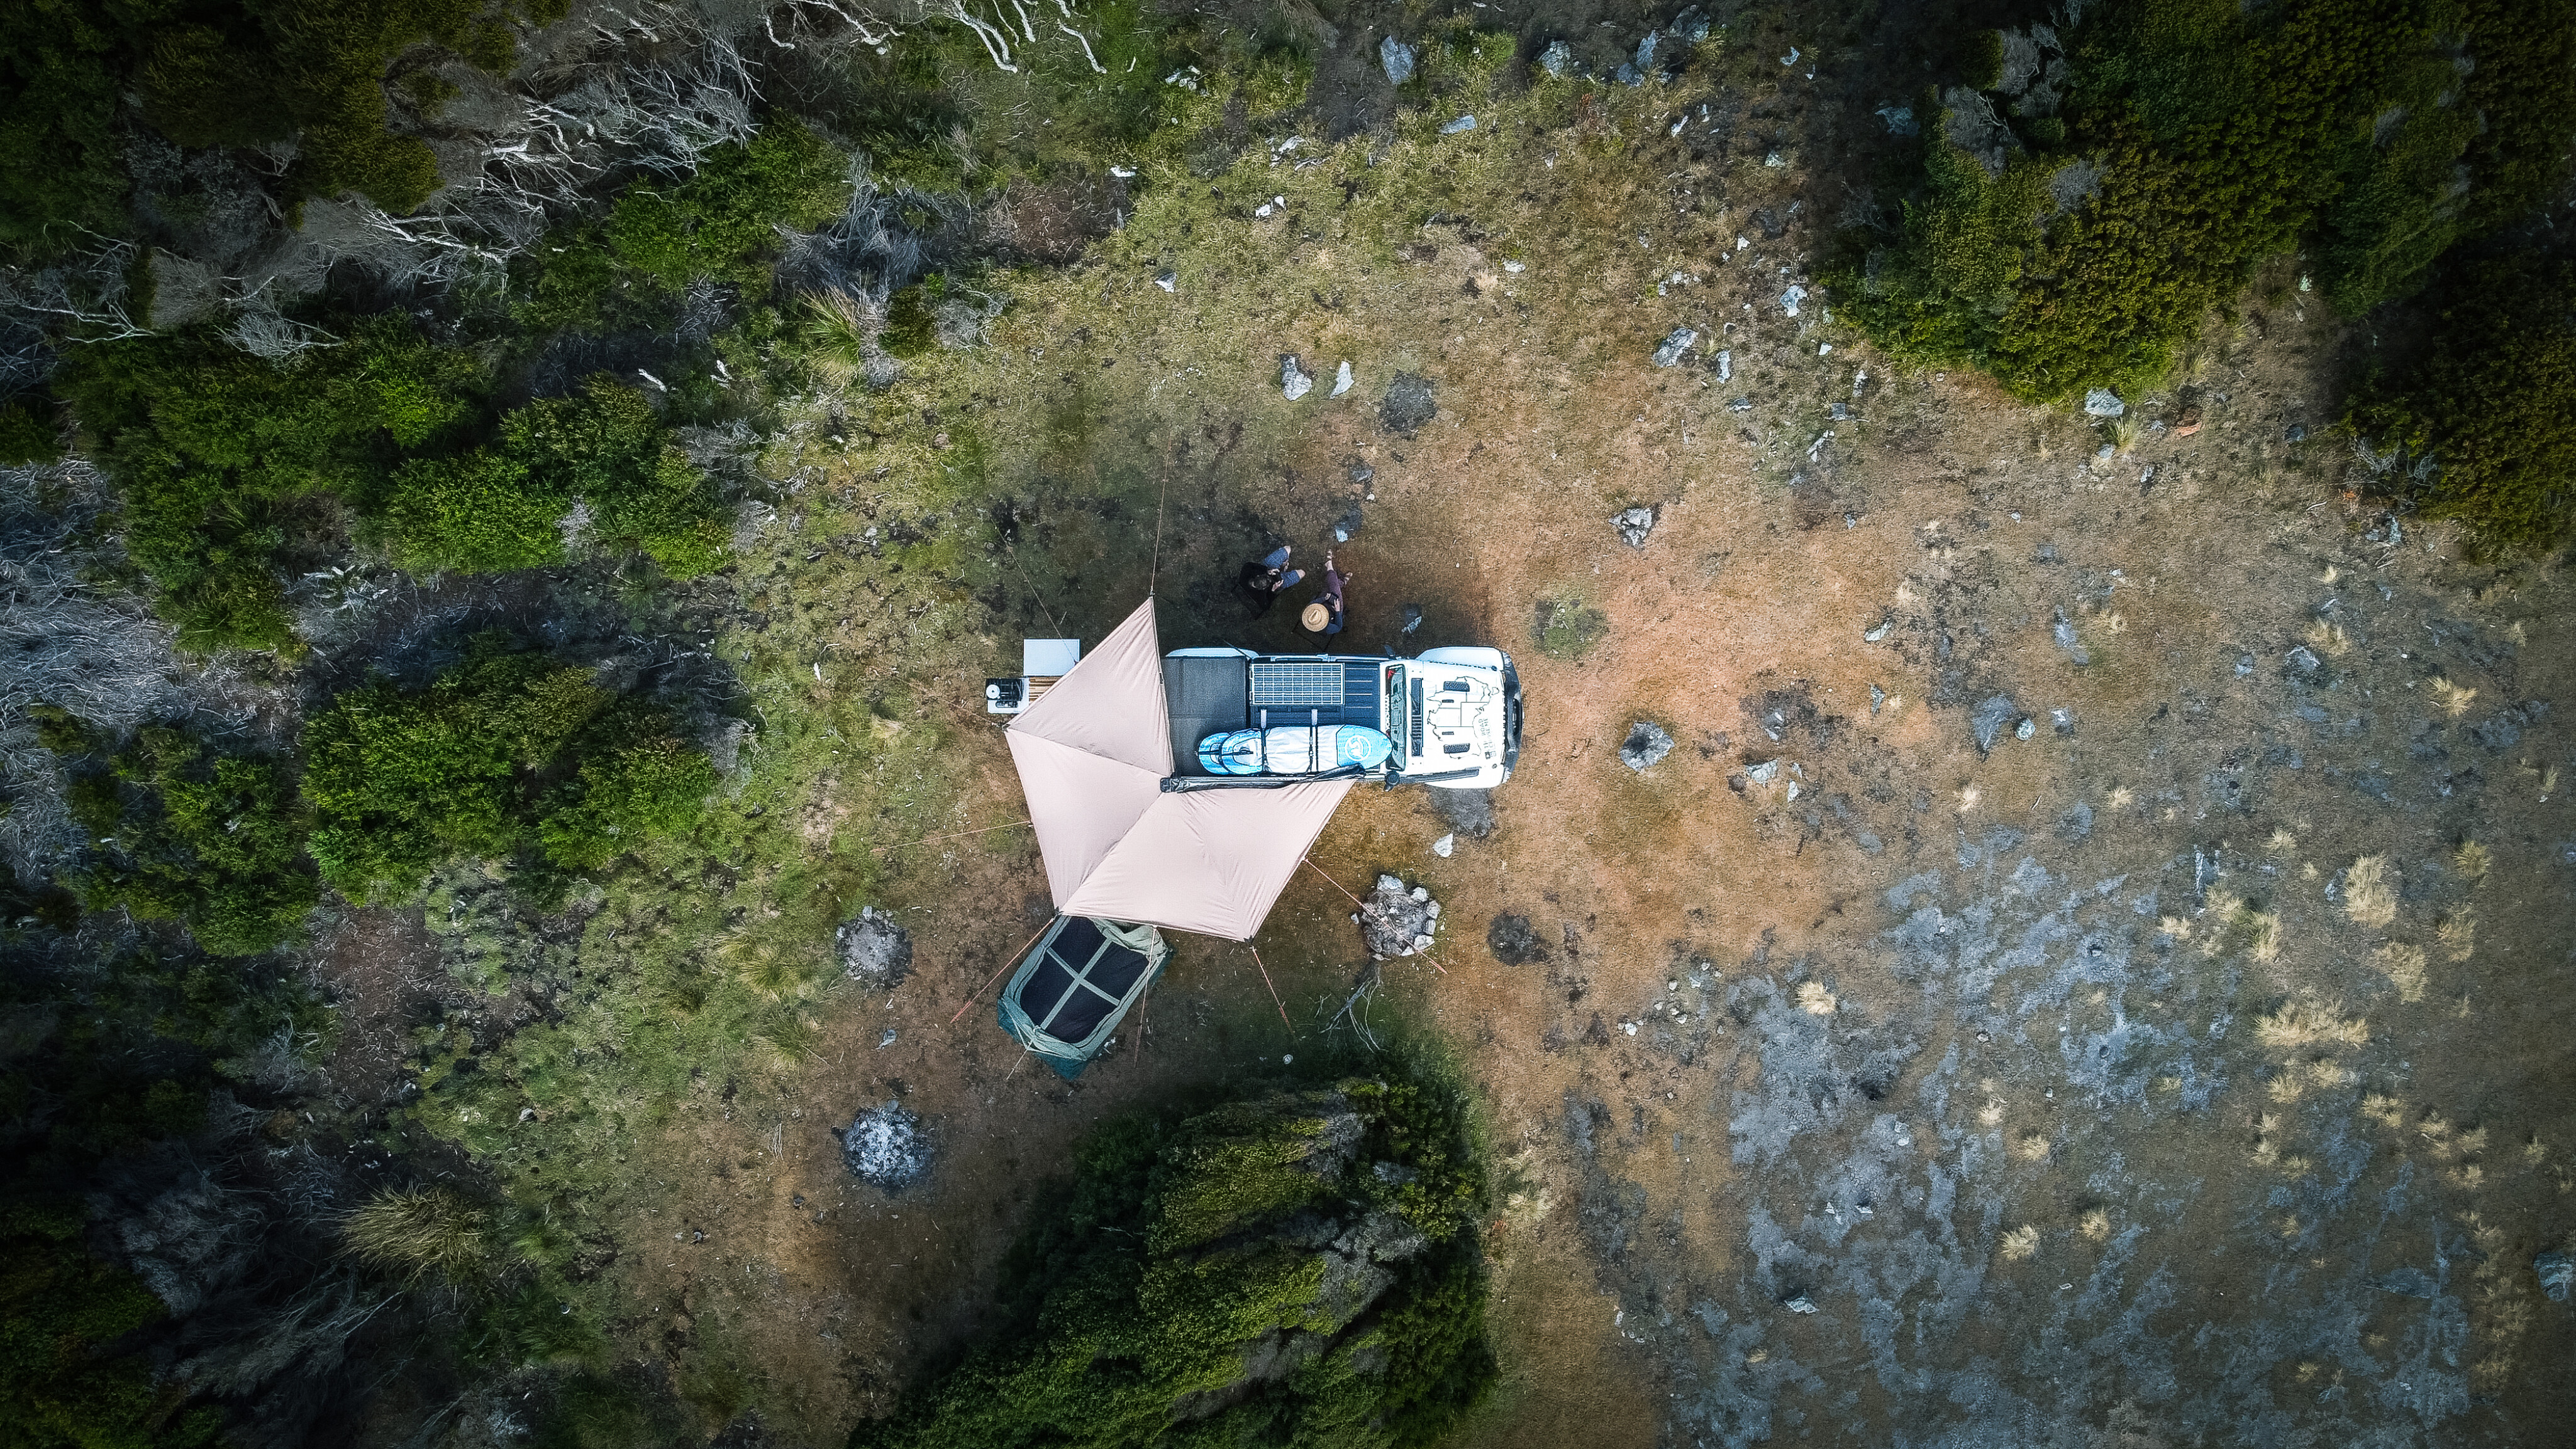 5d9a1b46/camping from above2 4x4 australia explore tasmania jpg